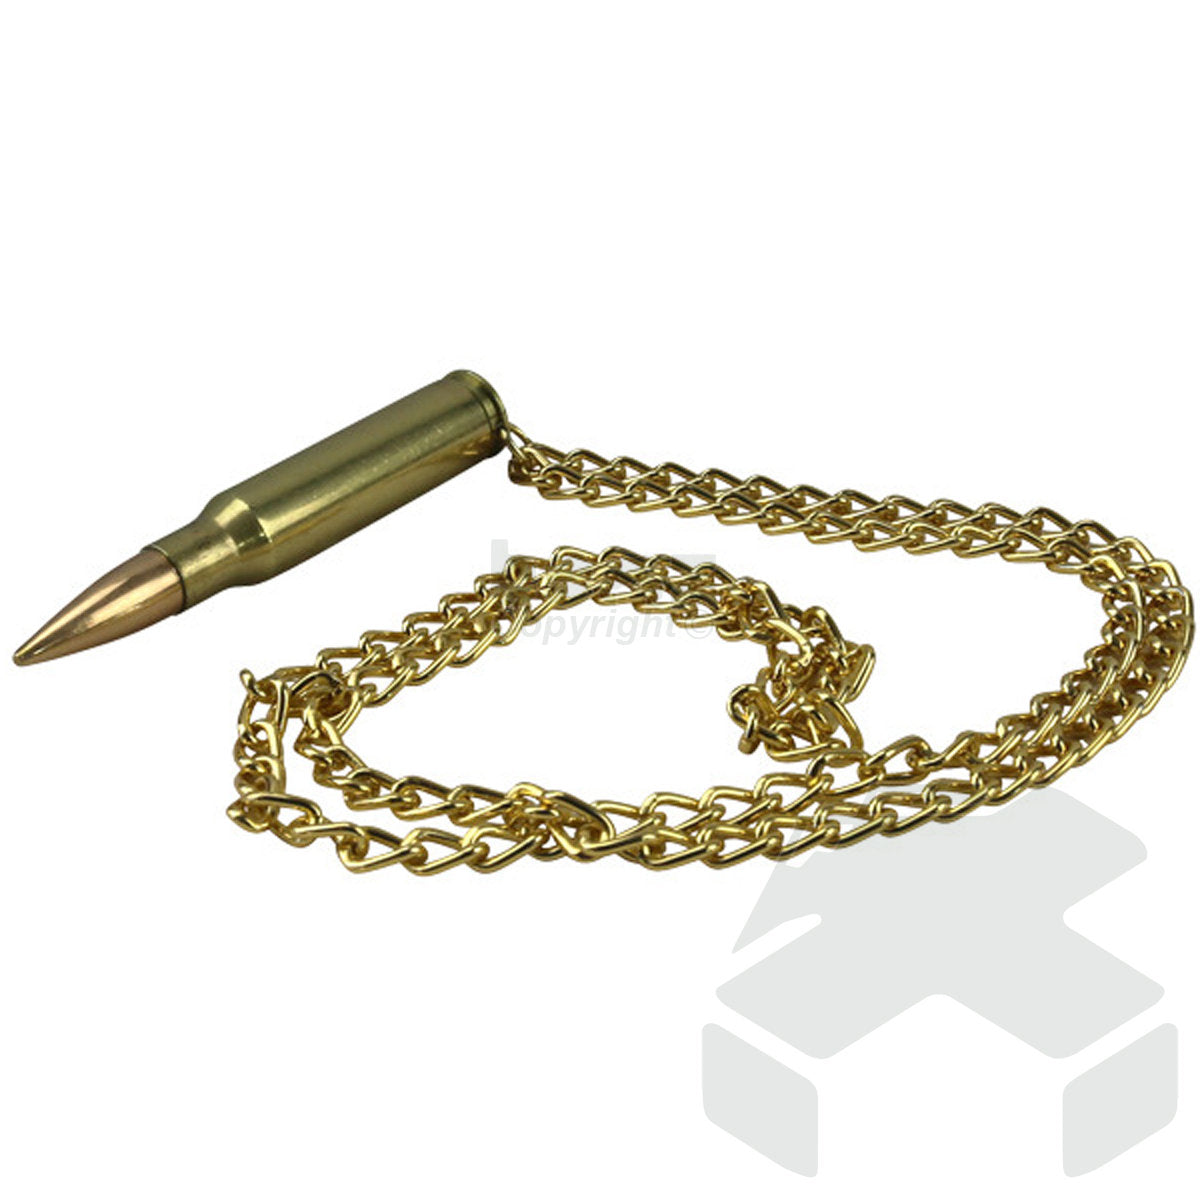 Kombat 7.62 Chain Necklace - Brass (5 Pack)